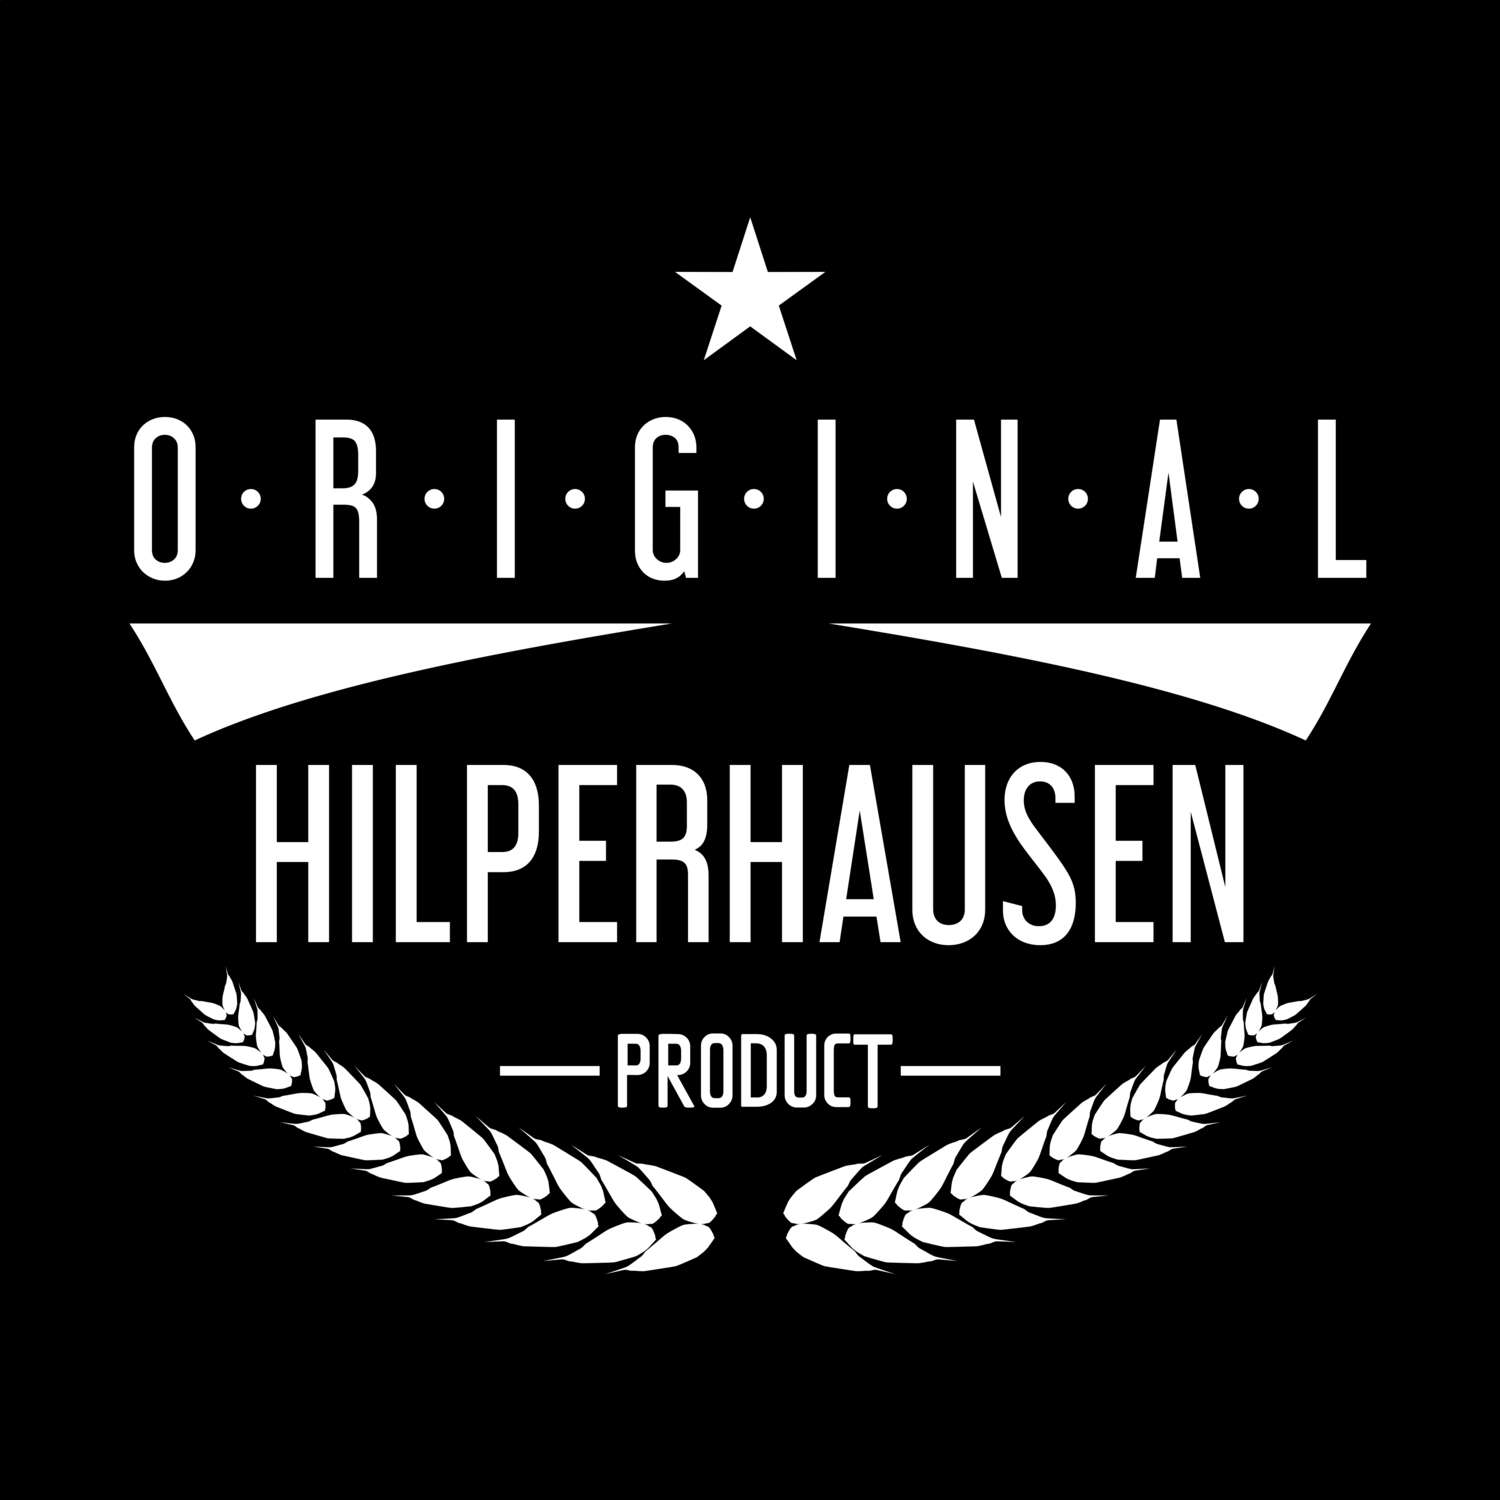 Hilperhausen T-Shirt »Original Product«